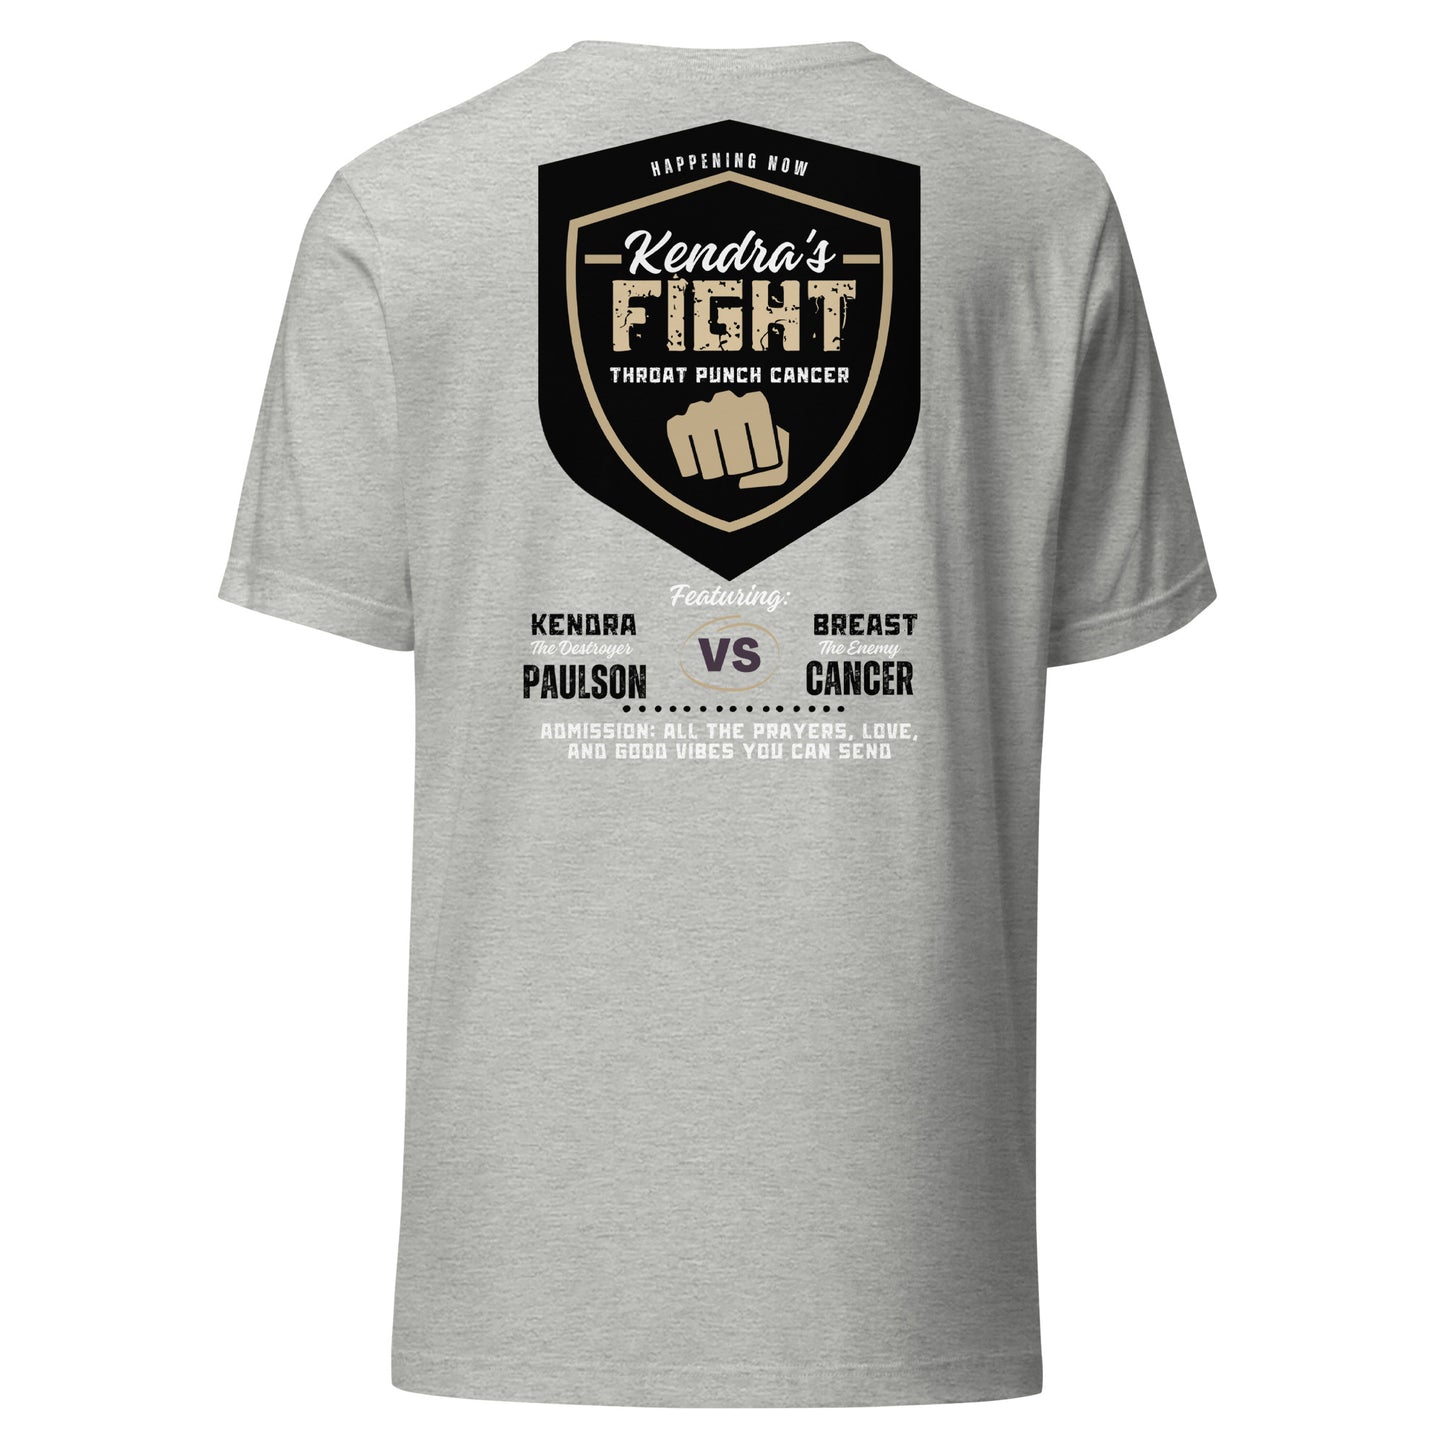 Kendra's Fight Unisex t-shirt